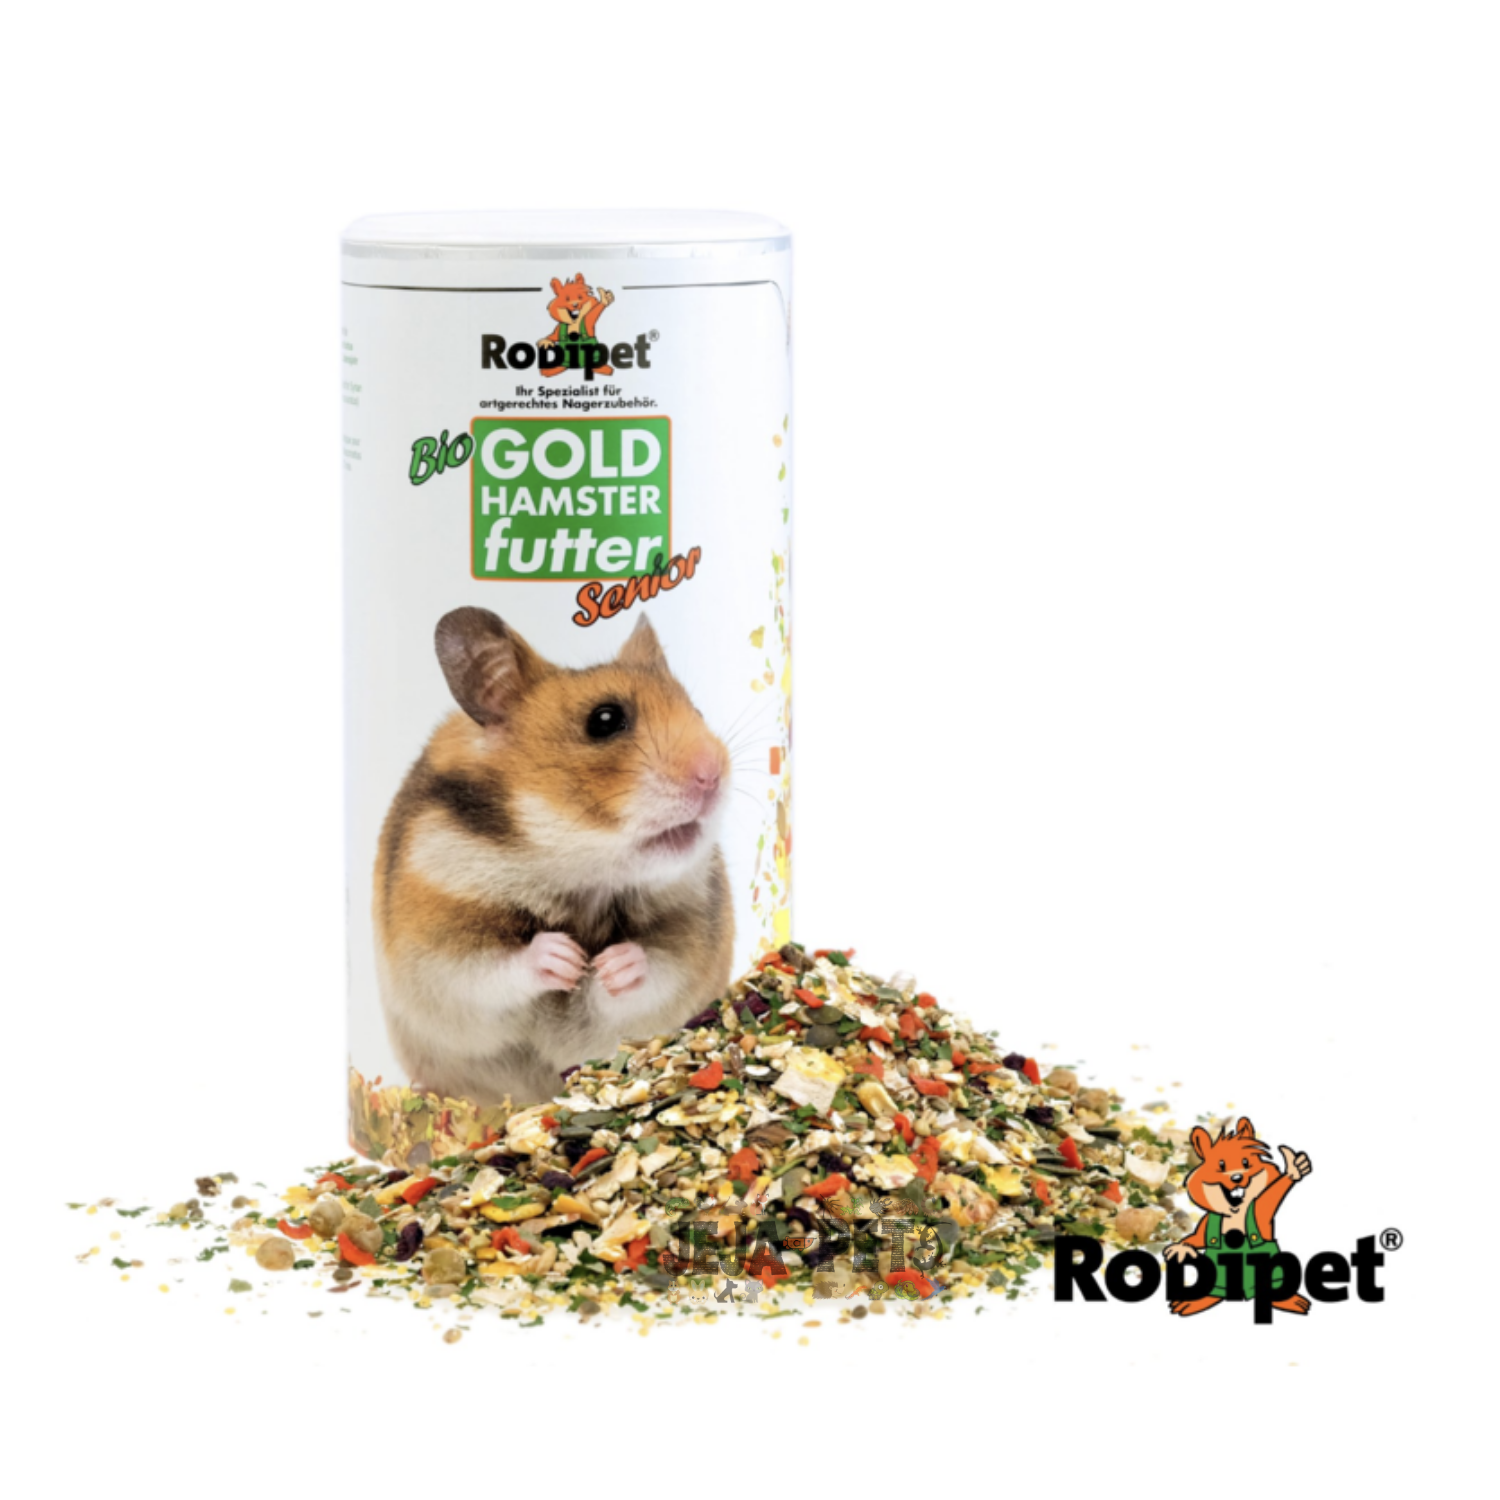 Rodipet Organic Syrian Hamster Food “SENiOR” - 500g